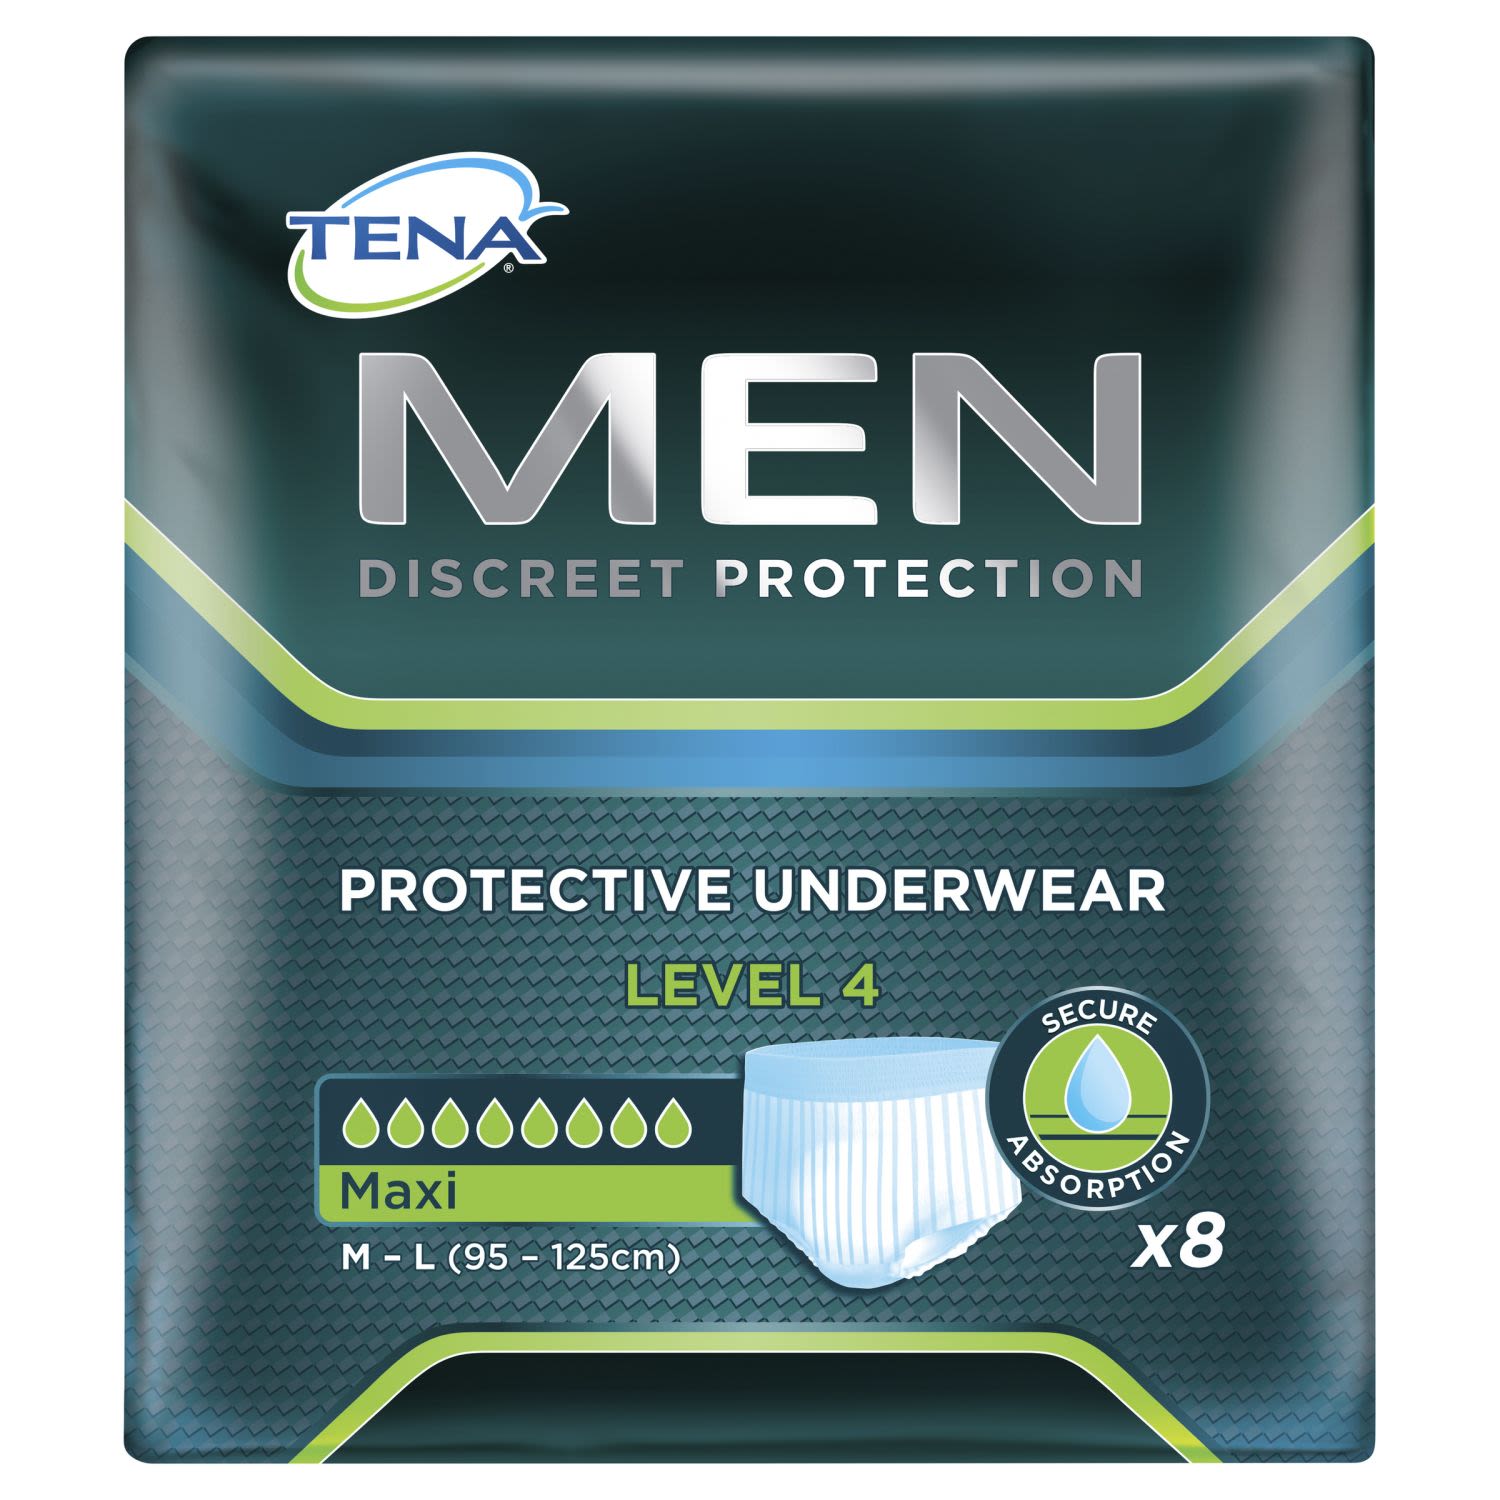 Tena Men Discreet Protection Protective Underwear Level 4 Maxi, 8 Each